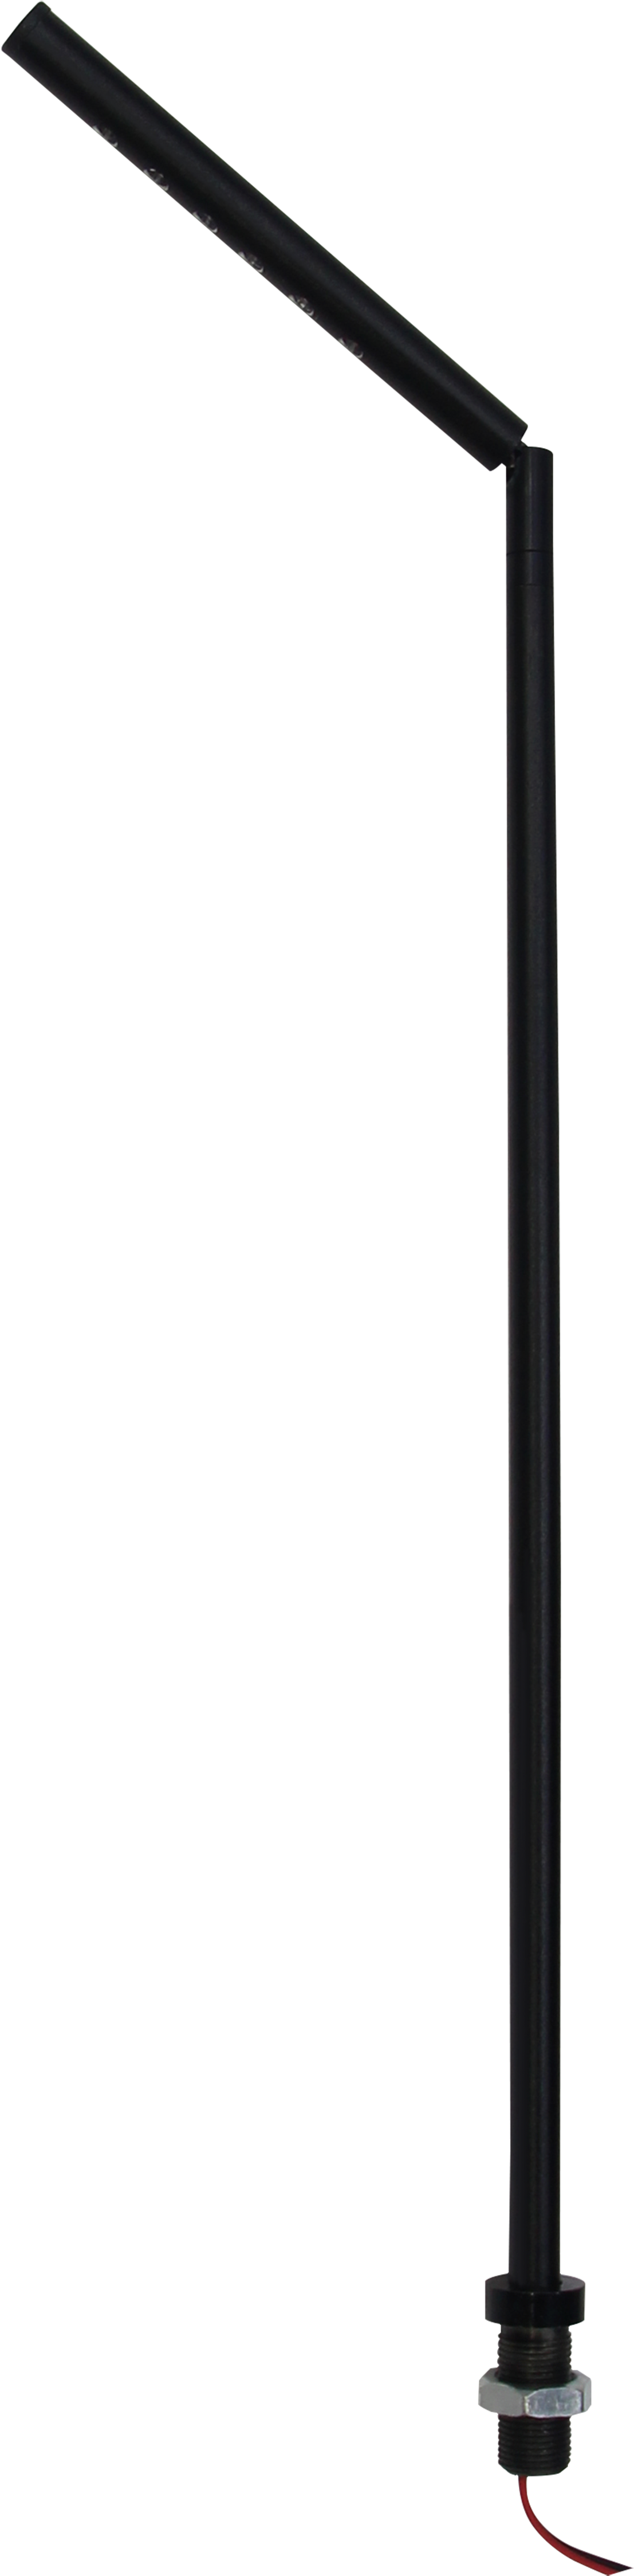 Jewelry Showcase Display Led Light Pole - Handrail (2500x5182)